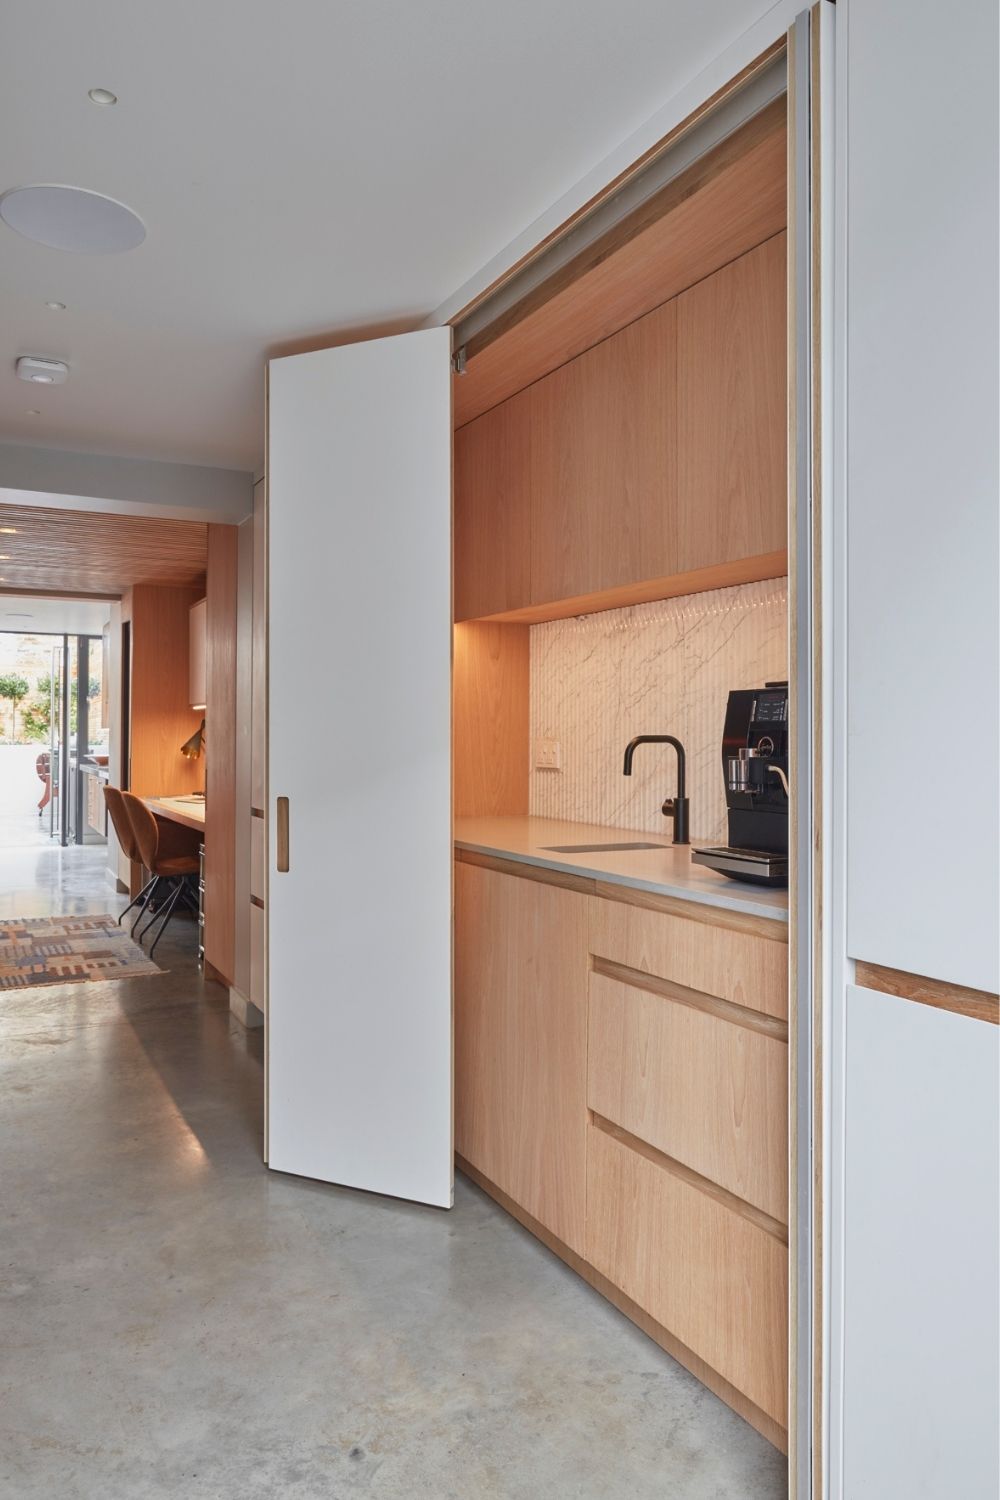 evoke projects ltd islington bespoke hidden kitchen behind full height doors